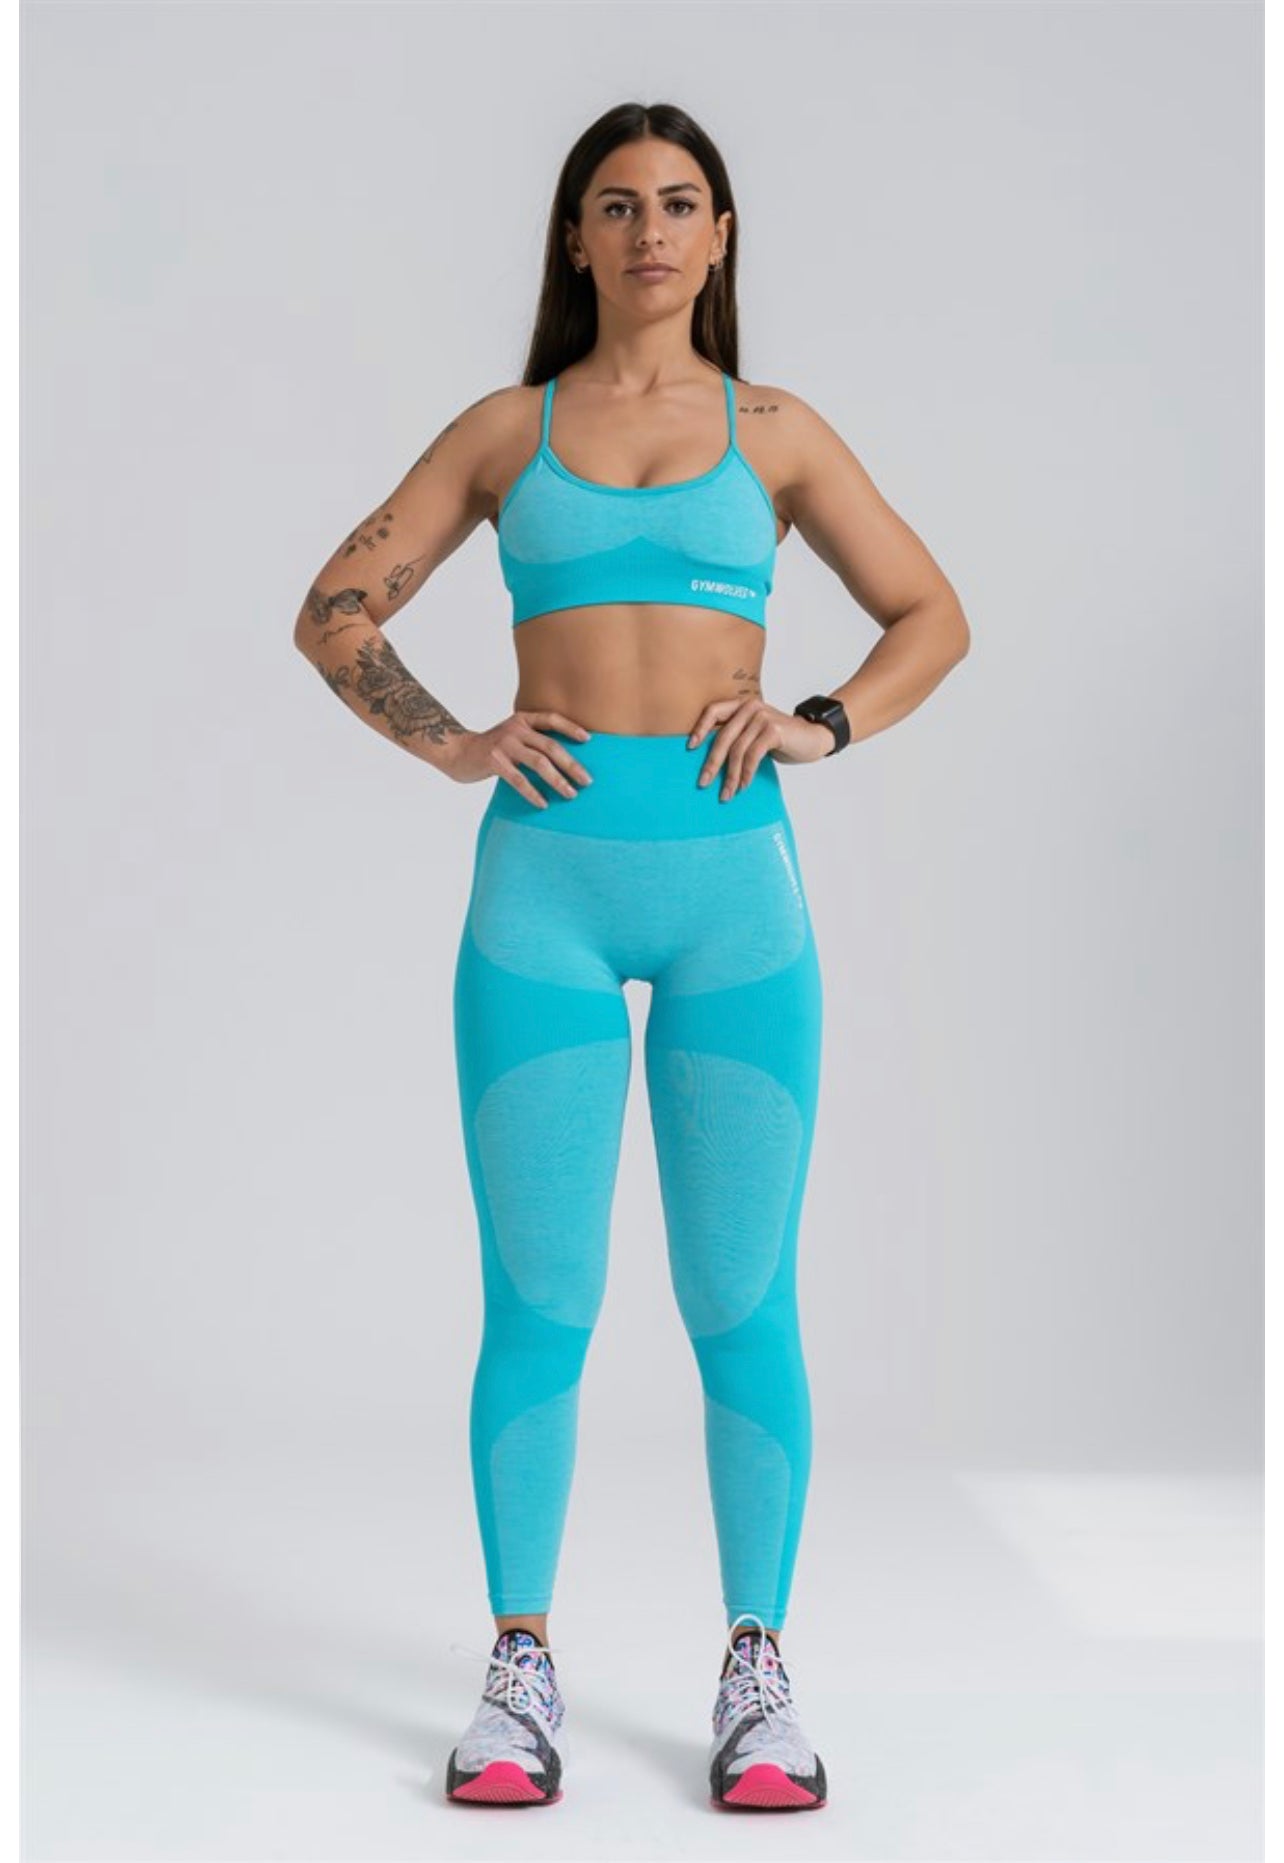 Gymwolves Women Seamless Sport Leggings | Turquoise | Strong Series |